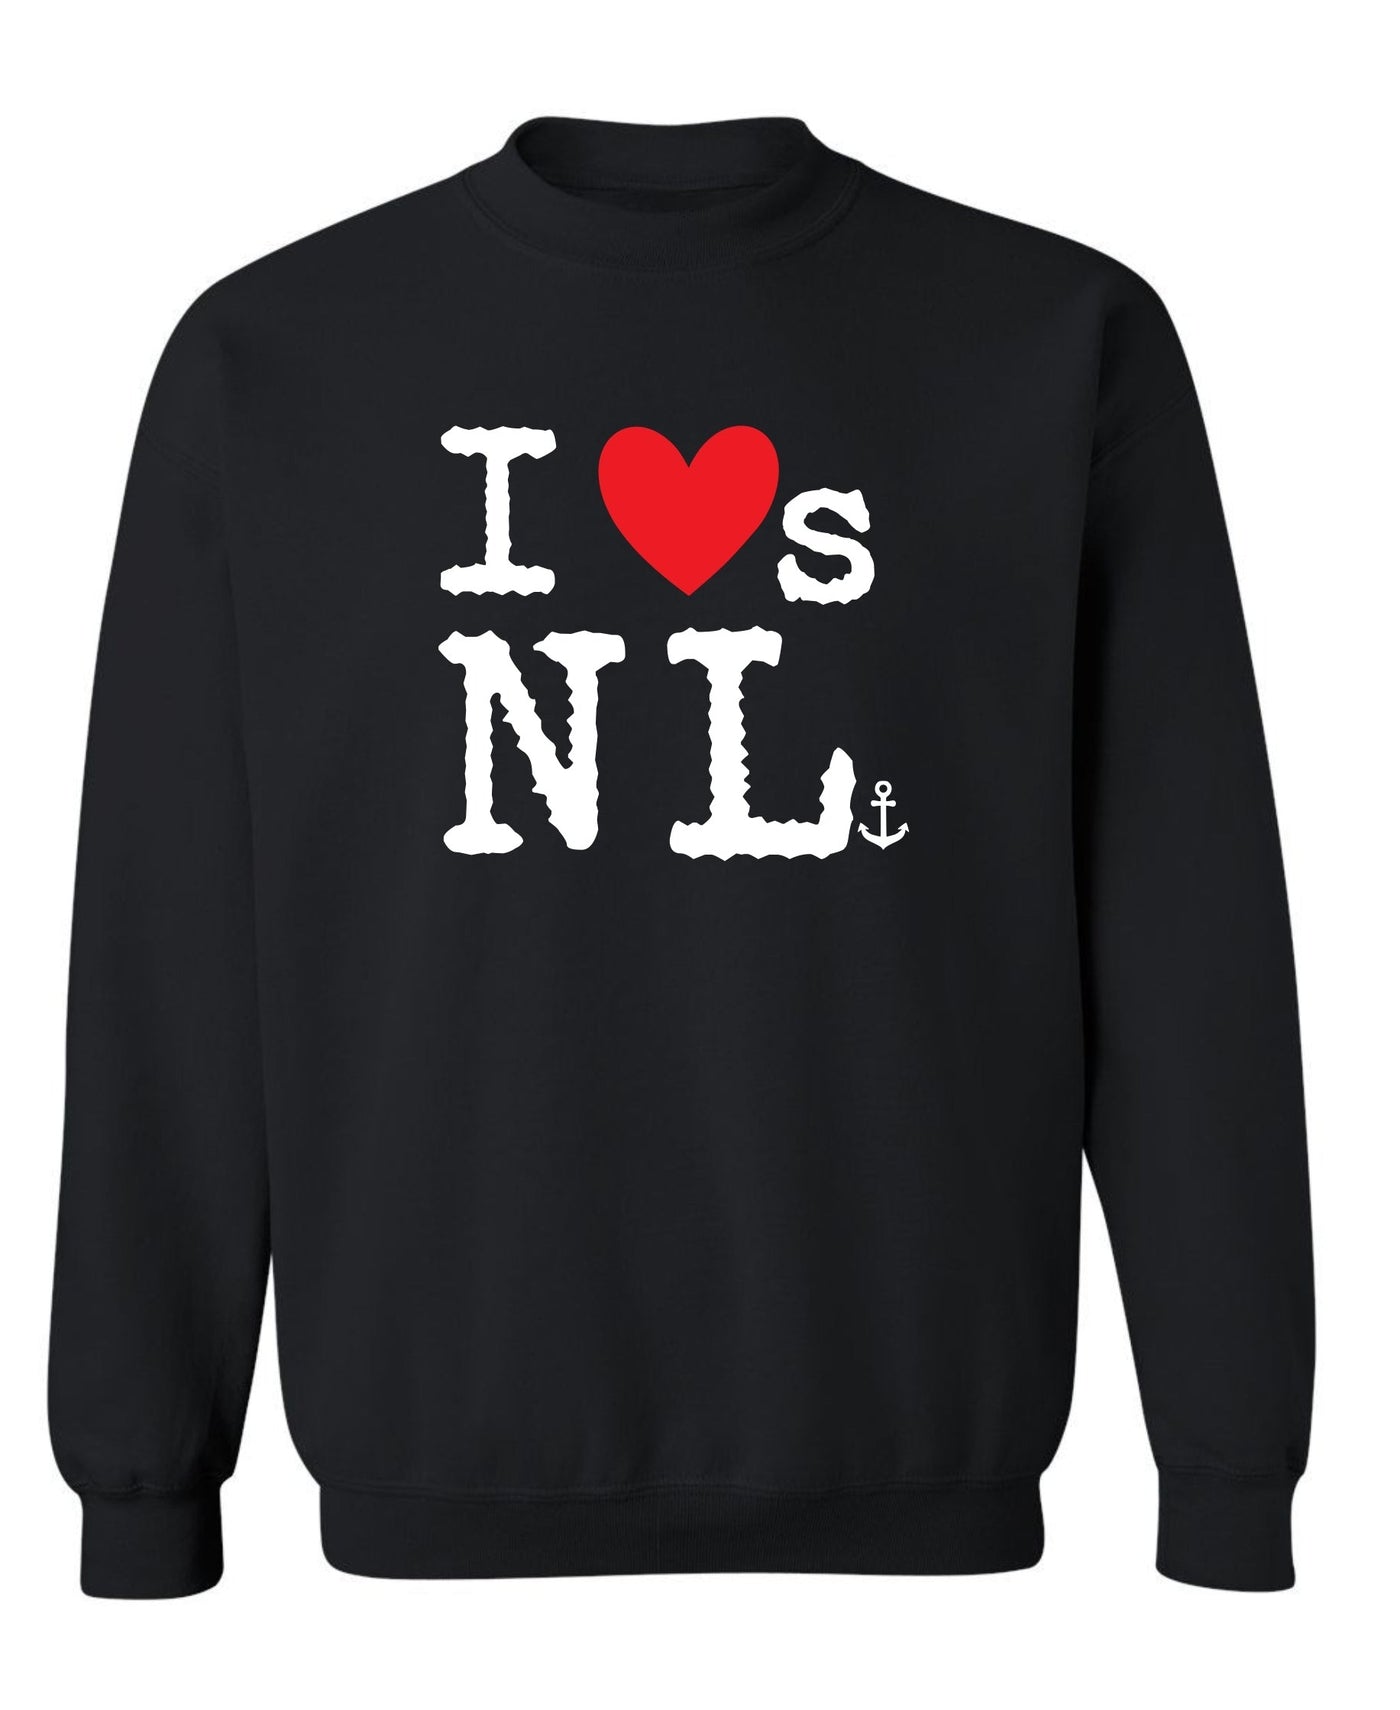 "I Loves NL" Red Heart Unisex Crewneck Sweatshirt